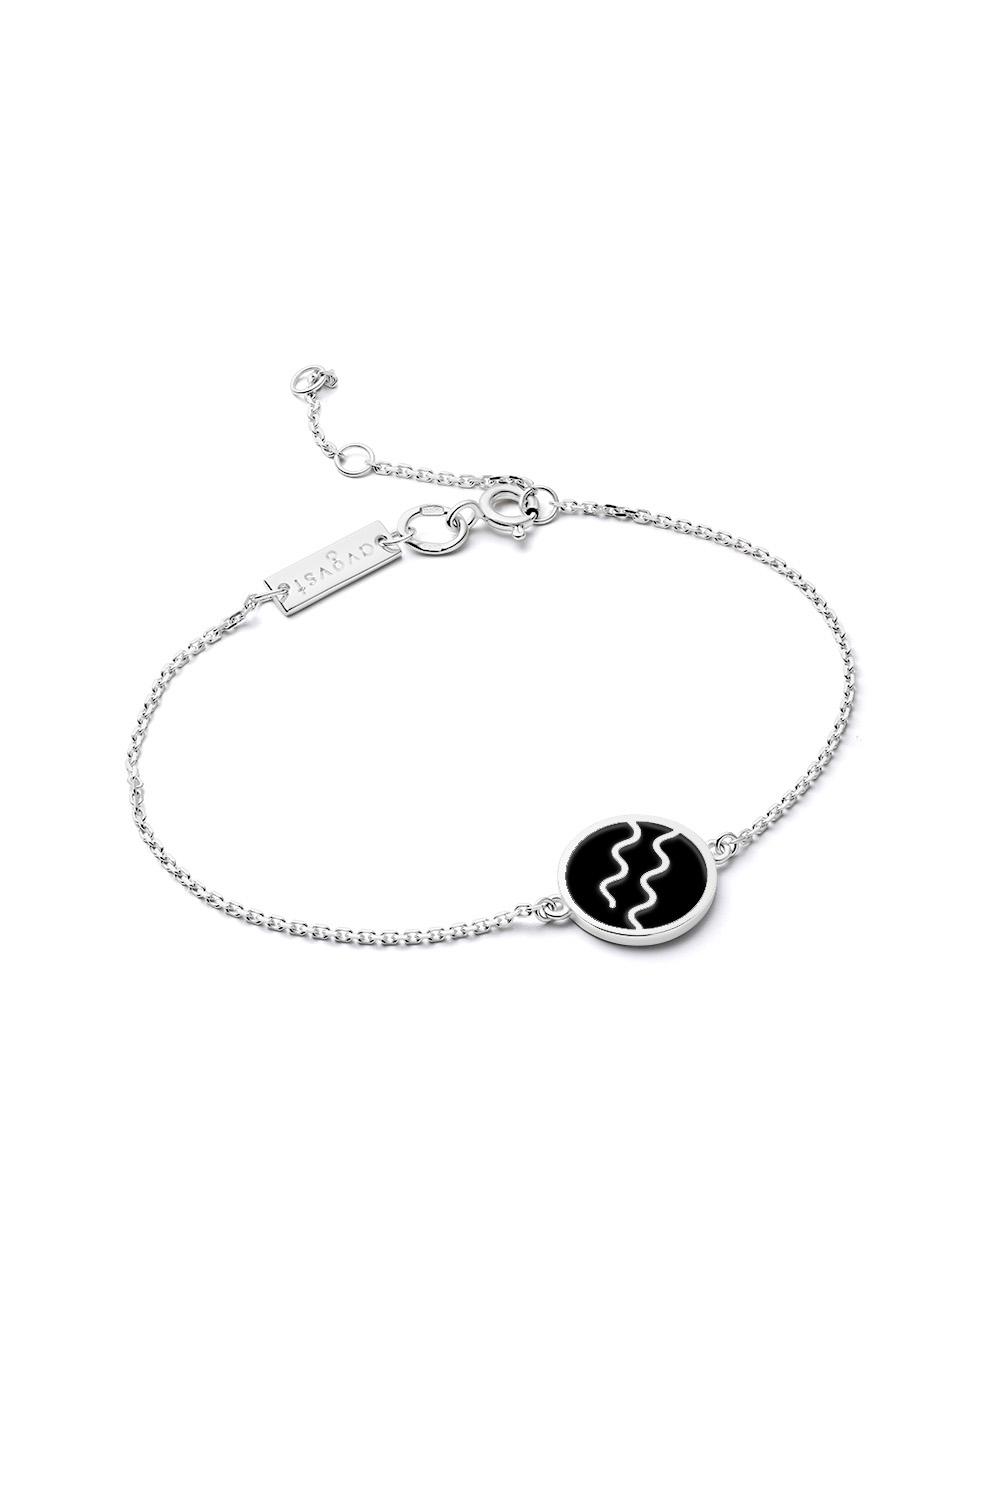 Zodiak Bracelet Virgo With Black Enamel